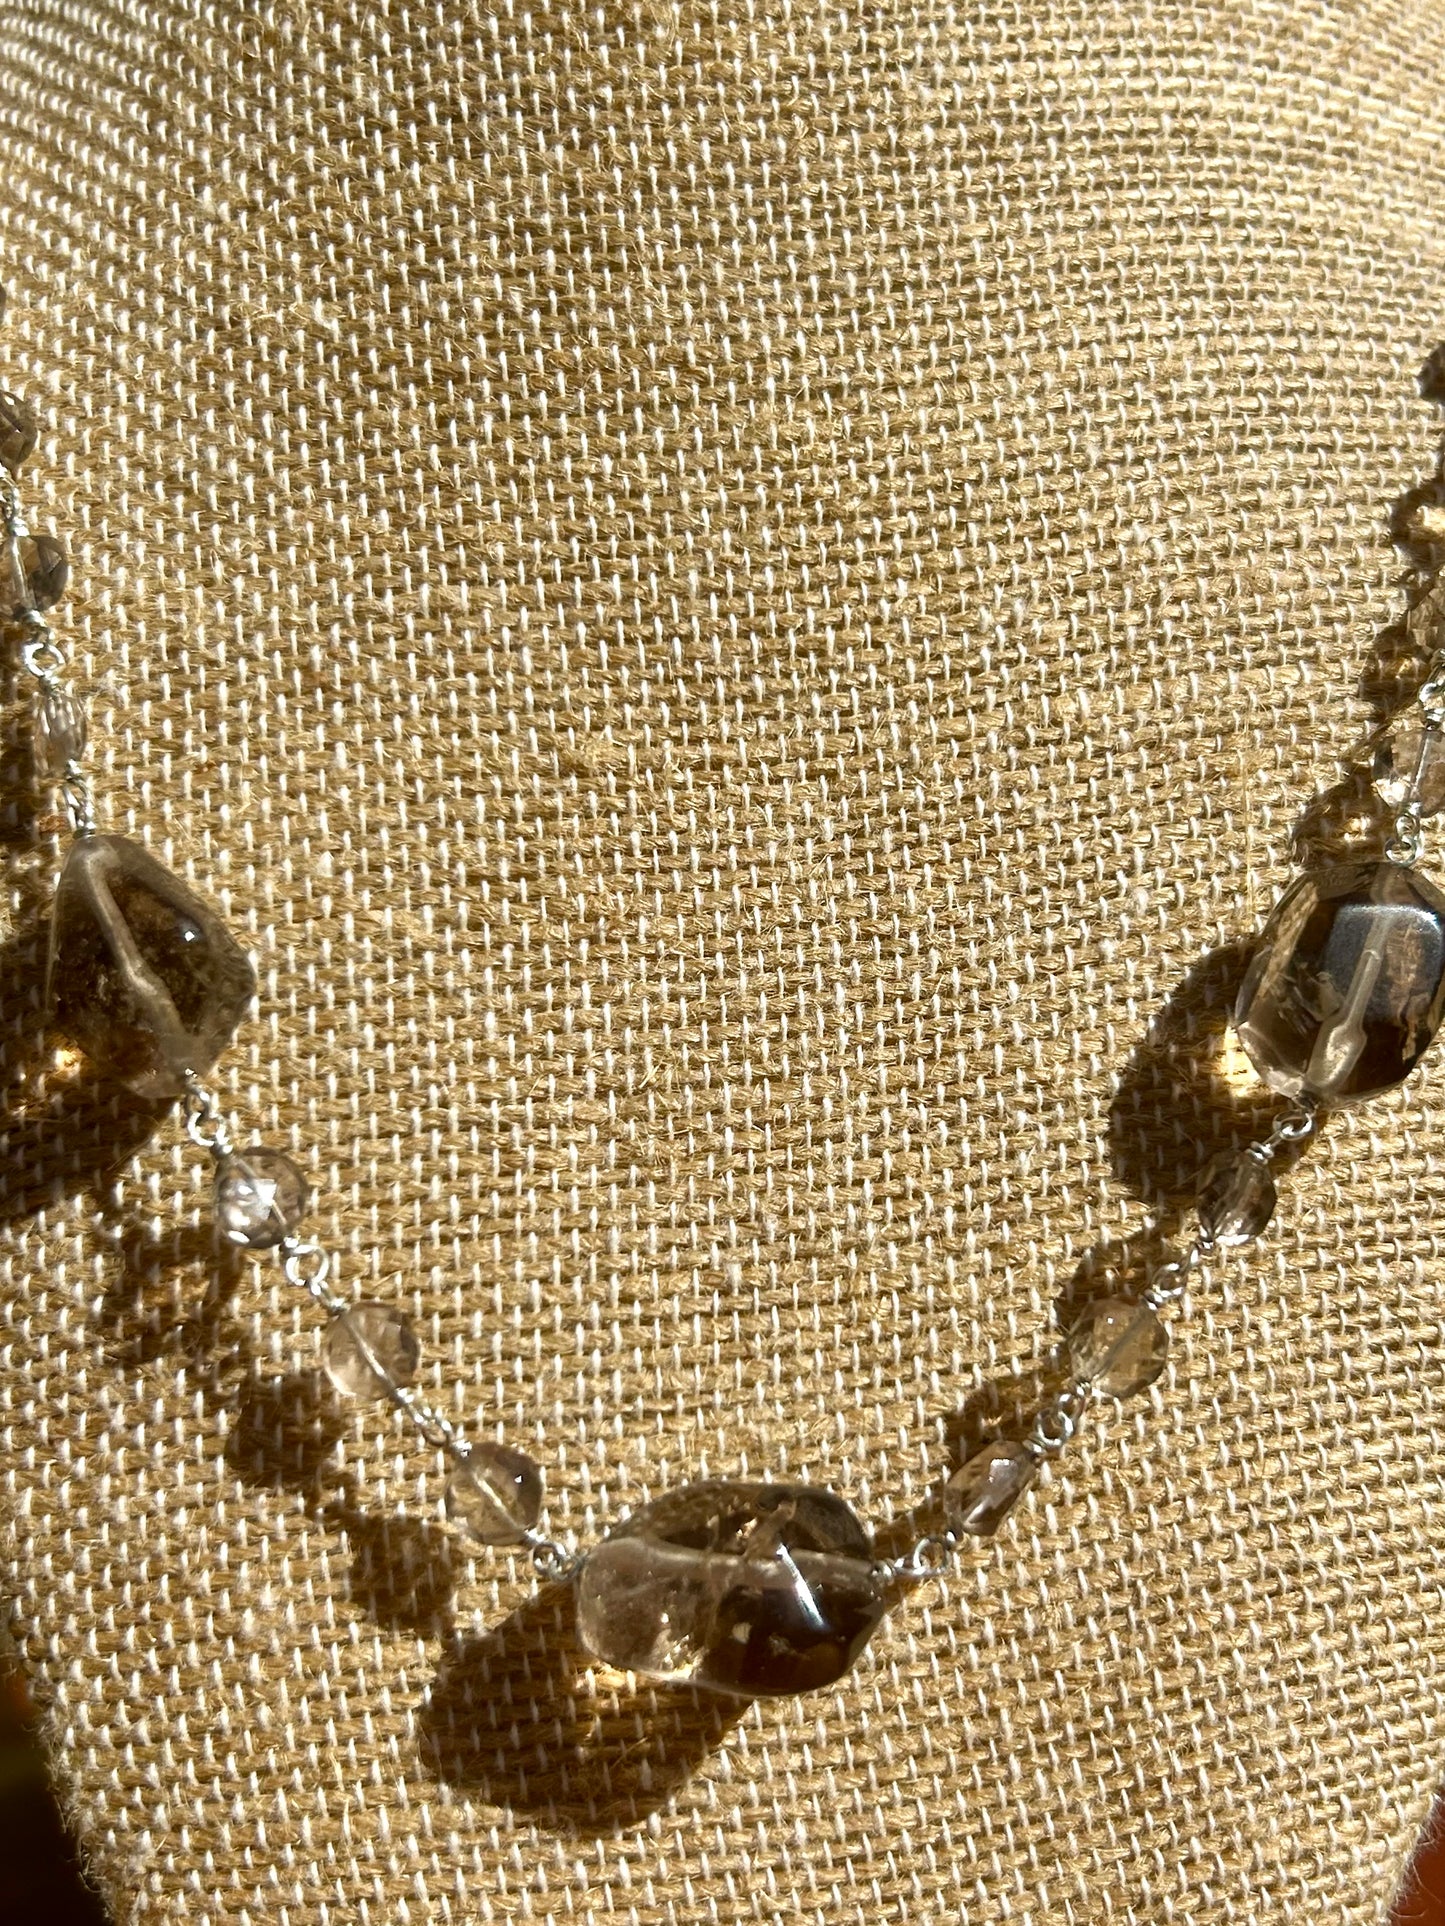 Smoky Quartz Gemstone Sterling Silver Chain Link Necklace